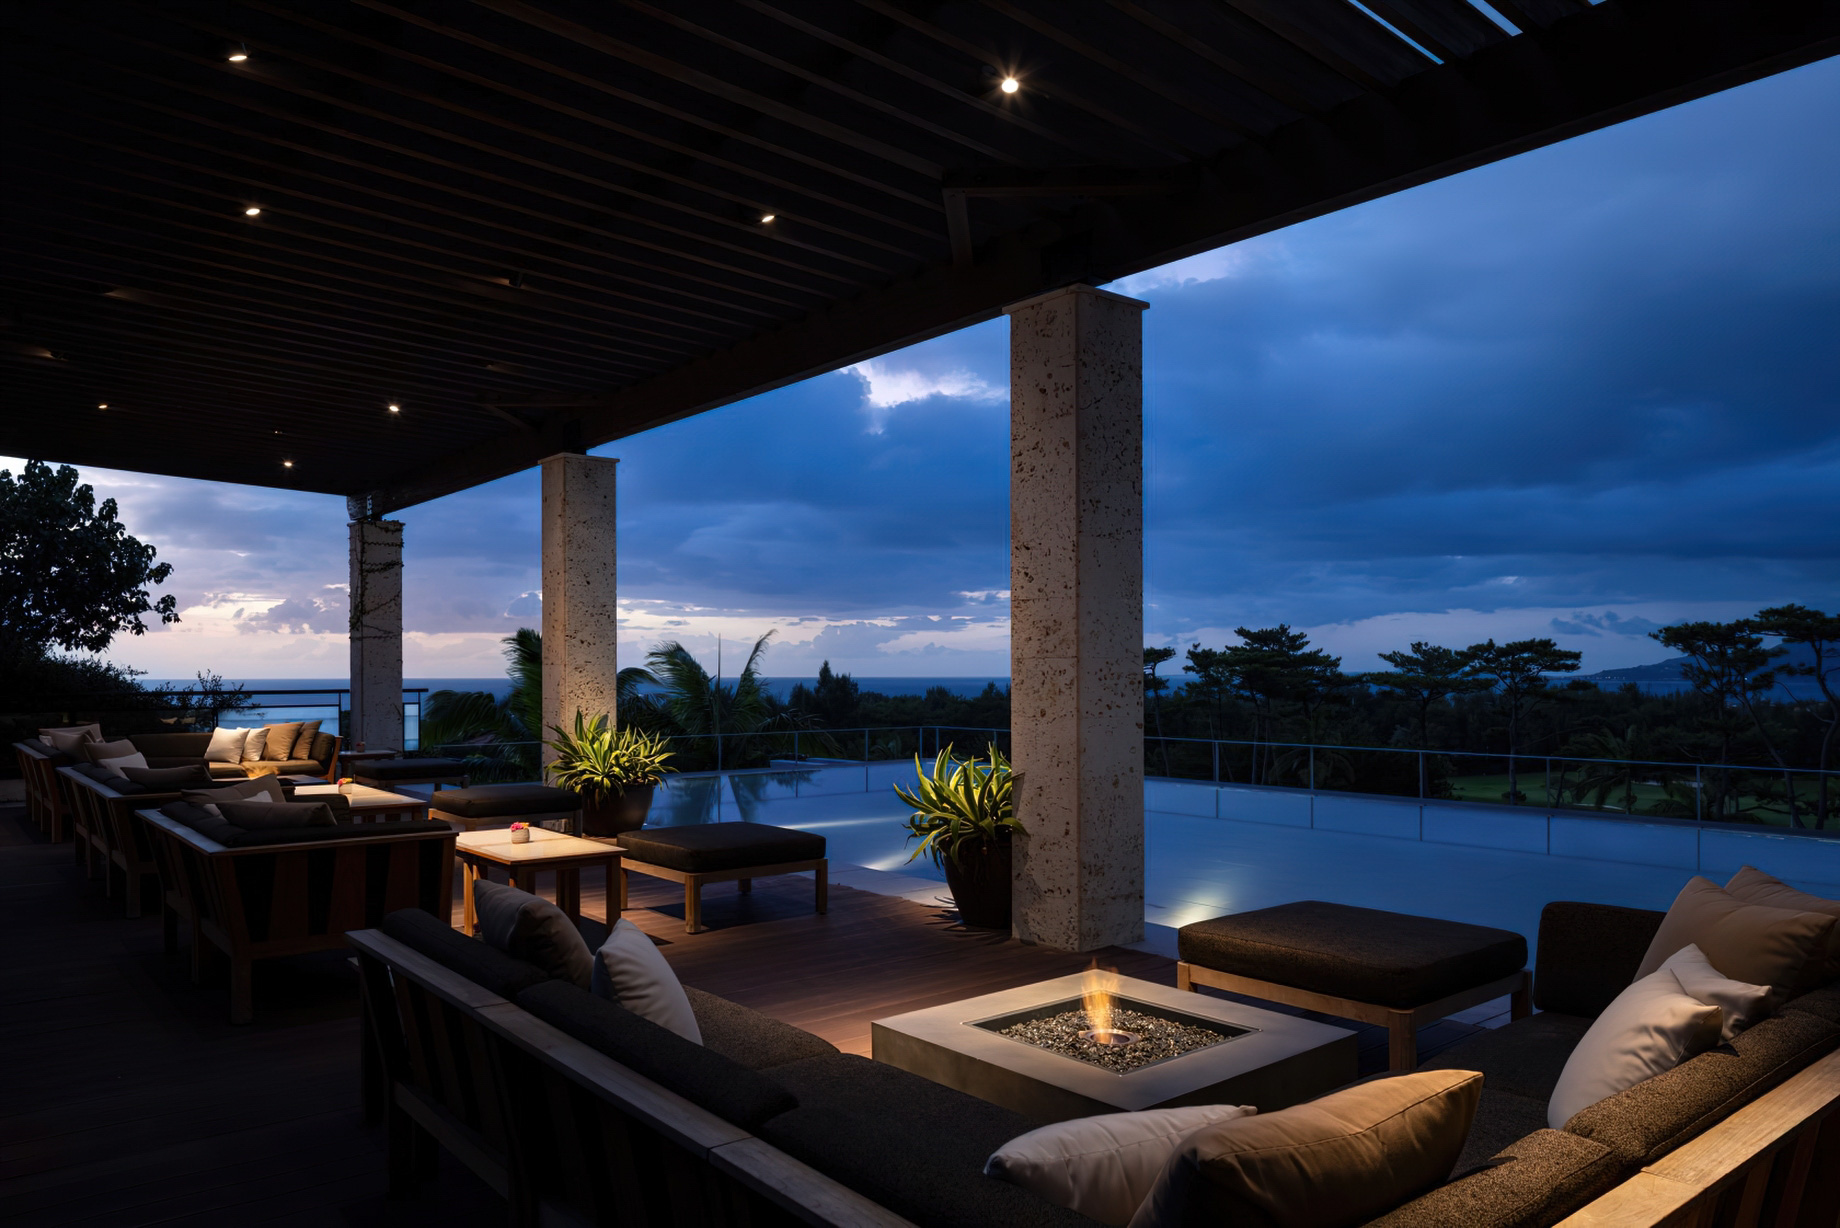 The Ritz-Carlton, Okinawa Hotel – Okinawa, Japan – Exterior Lounge Sunset